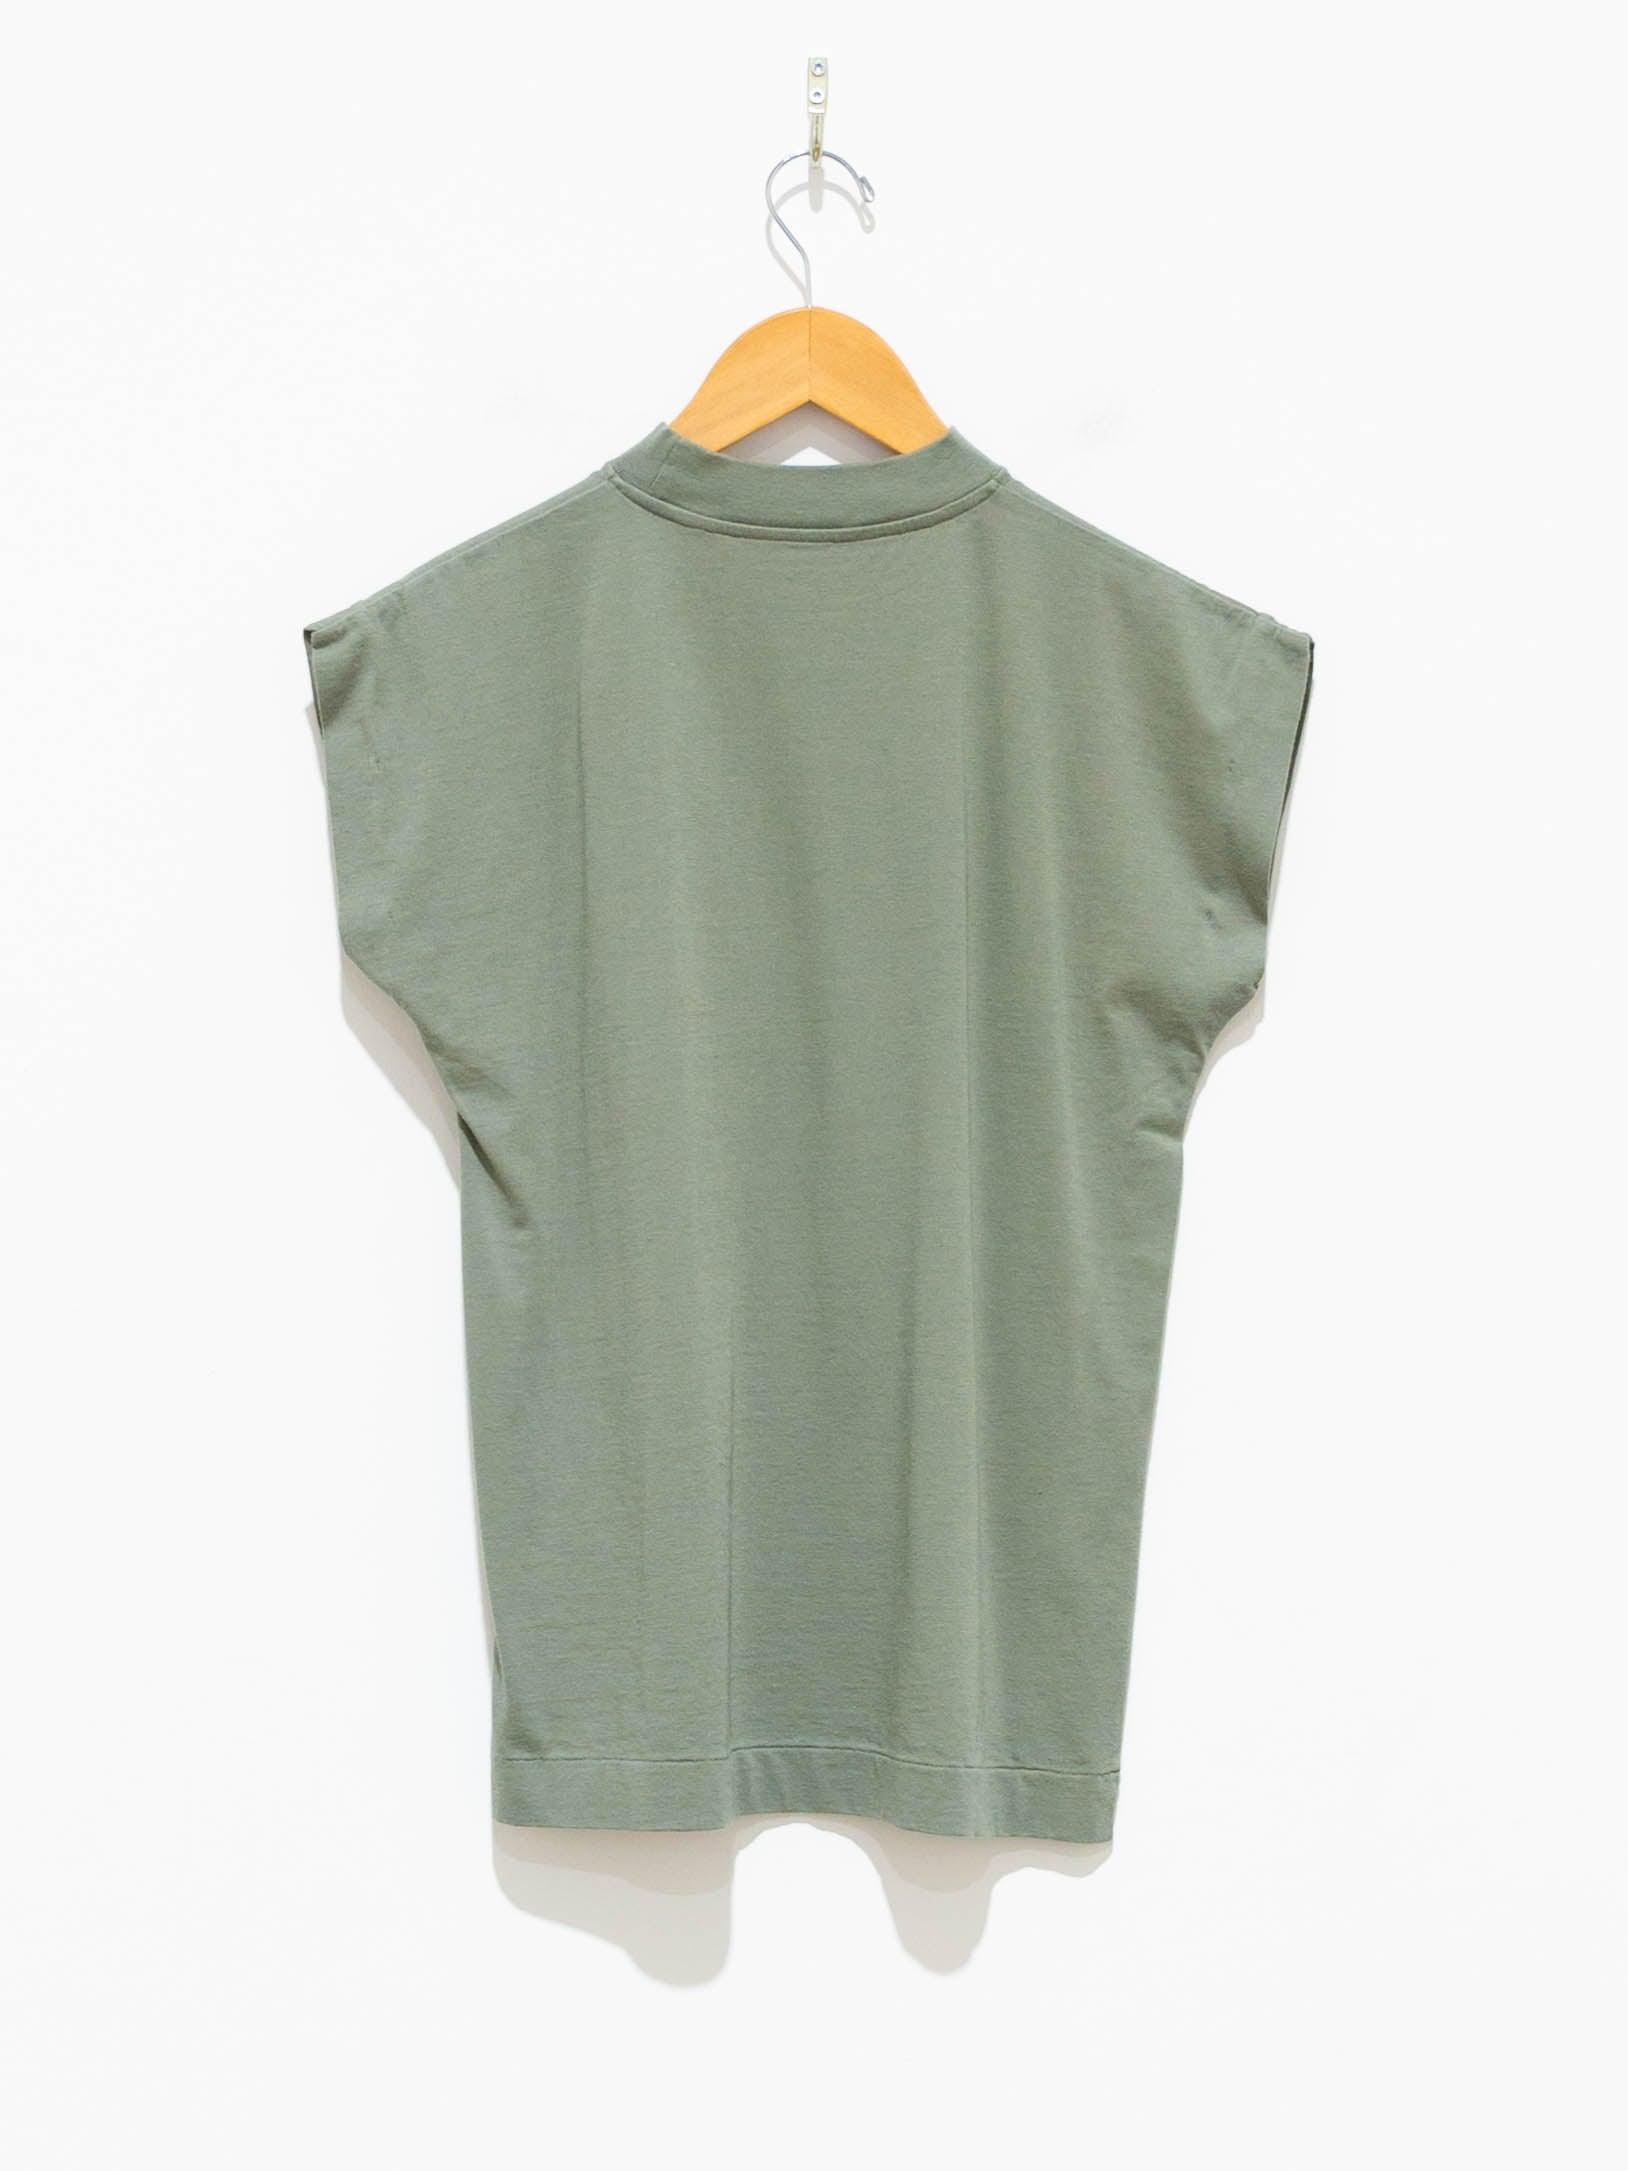 Namu Shop - Phlannel Light Suvin French Sleeve T-Shirt - Light Green